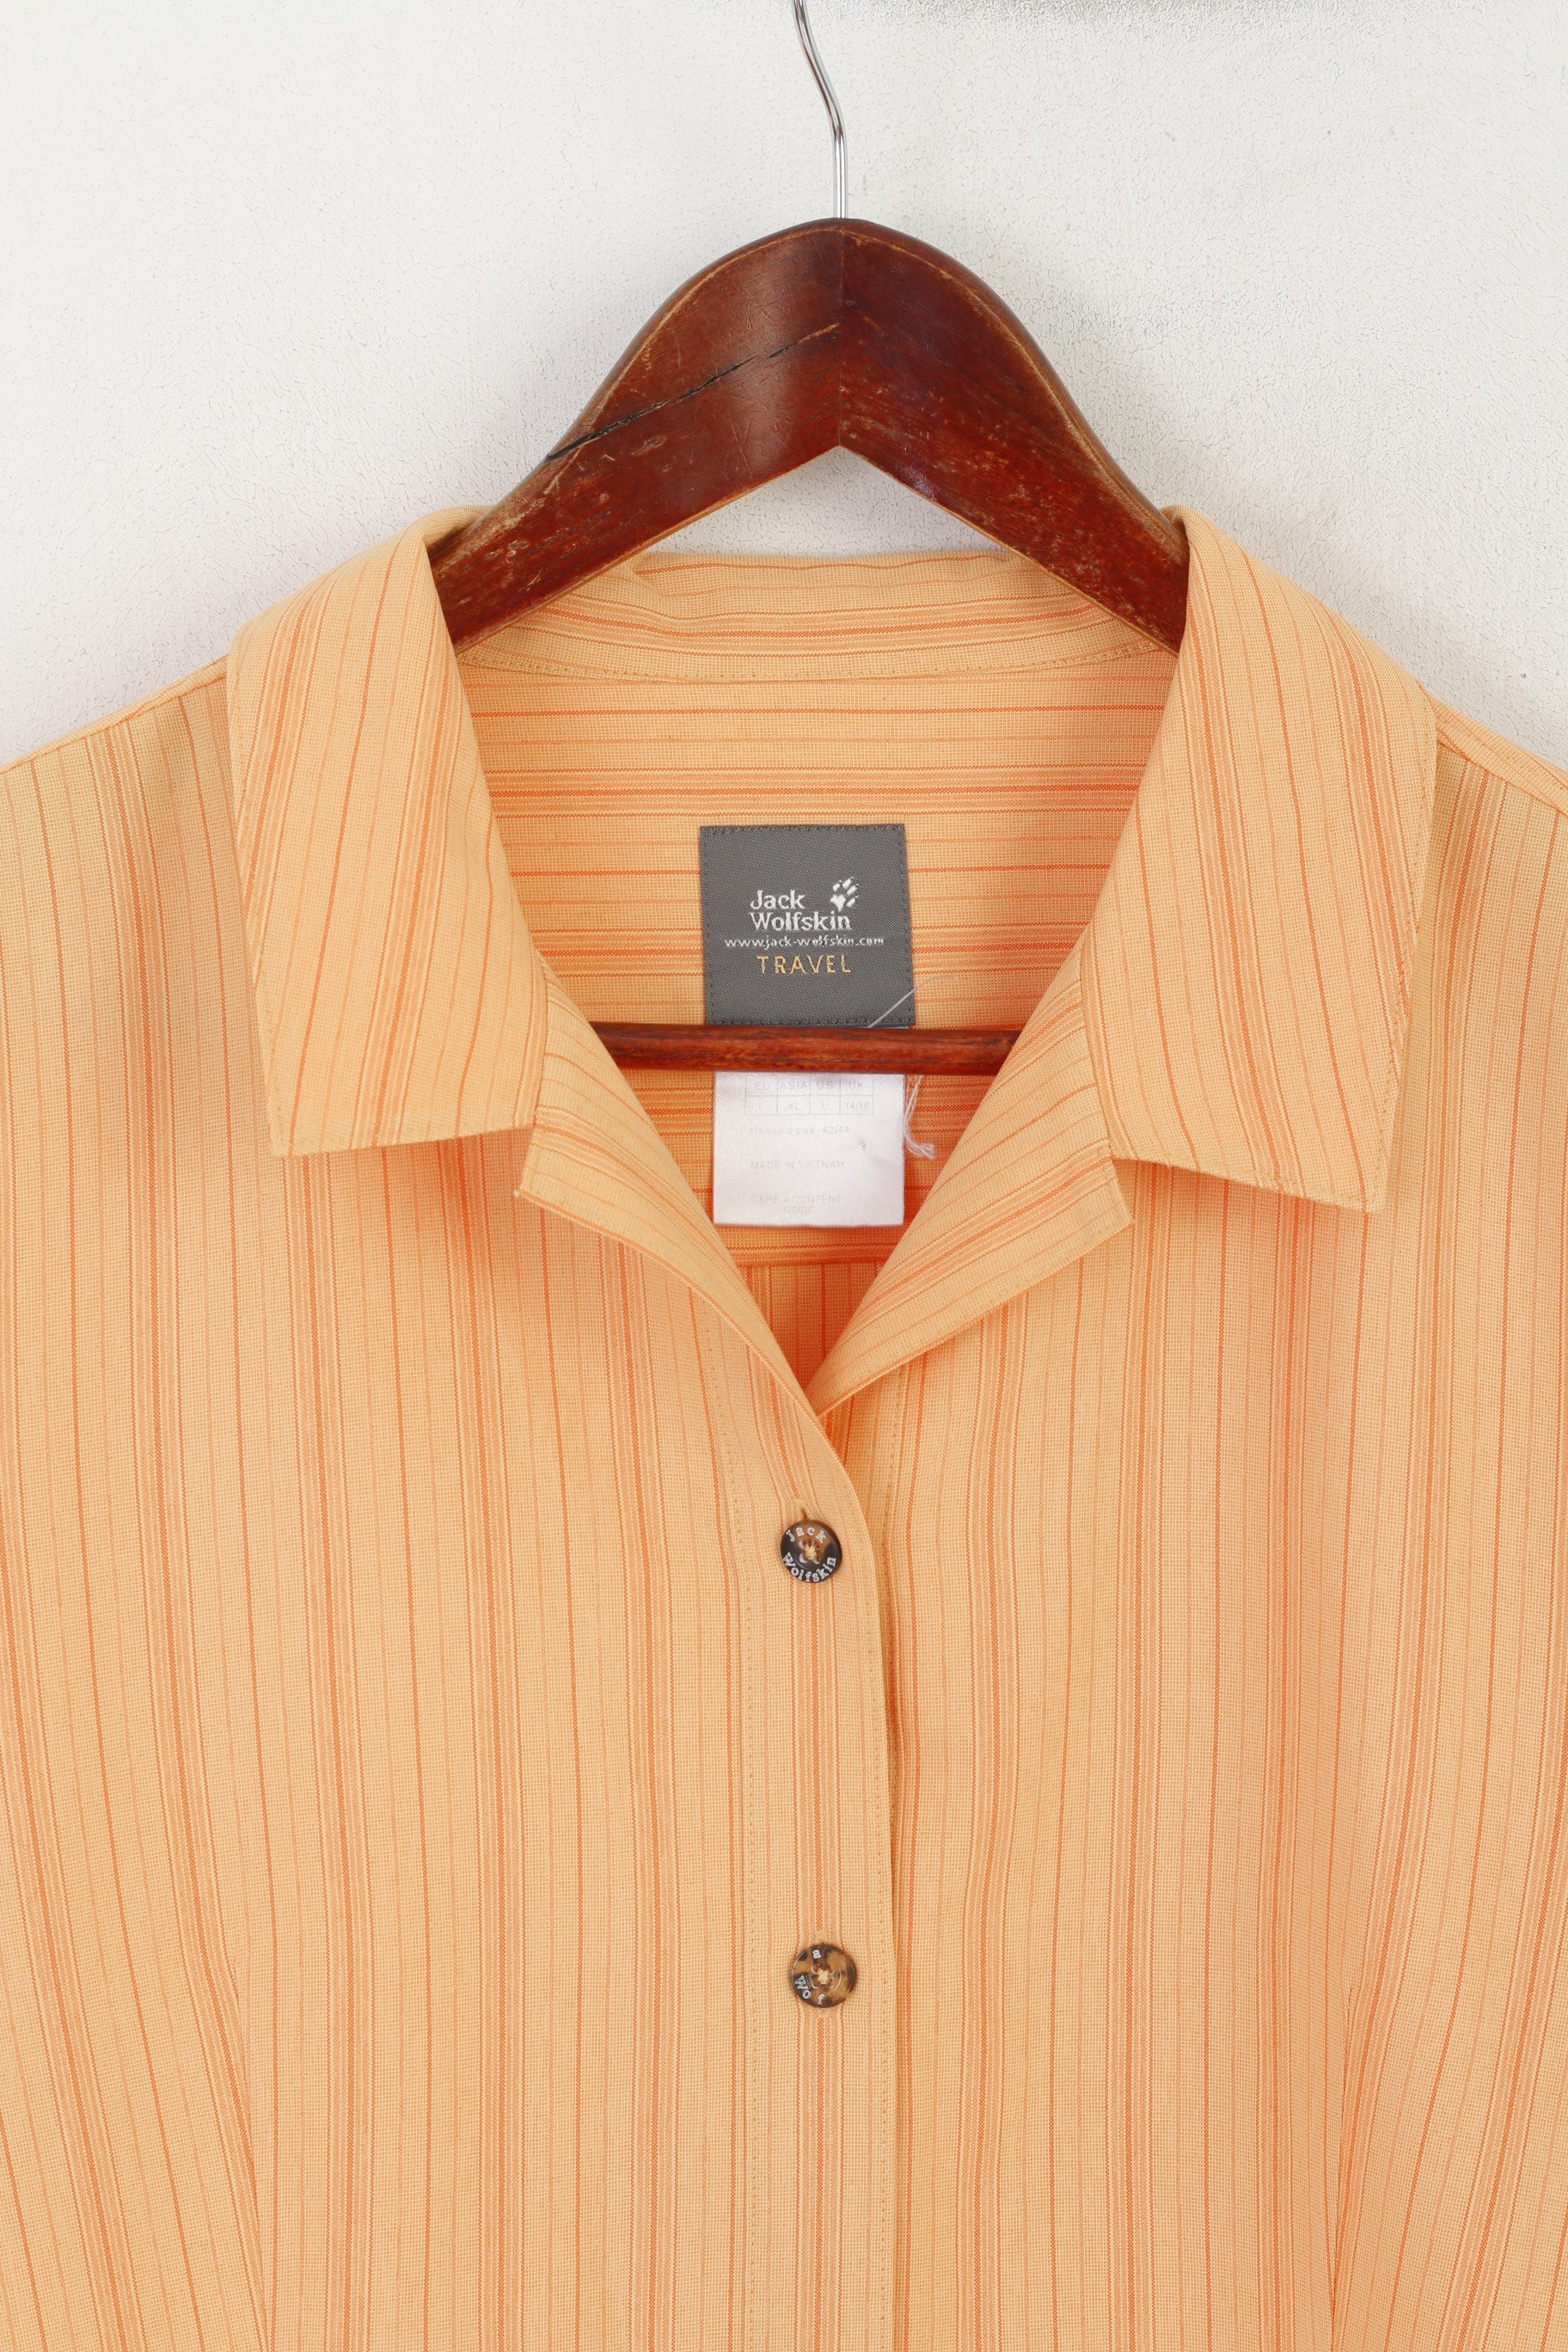 Women Casual L Wolfskin Outdoor Travel Clothes Jack Retrospect – Shirt 14/16 Orange Striped